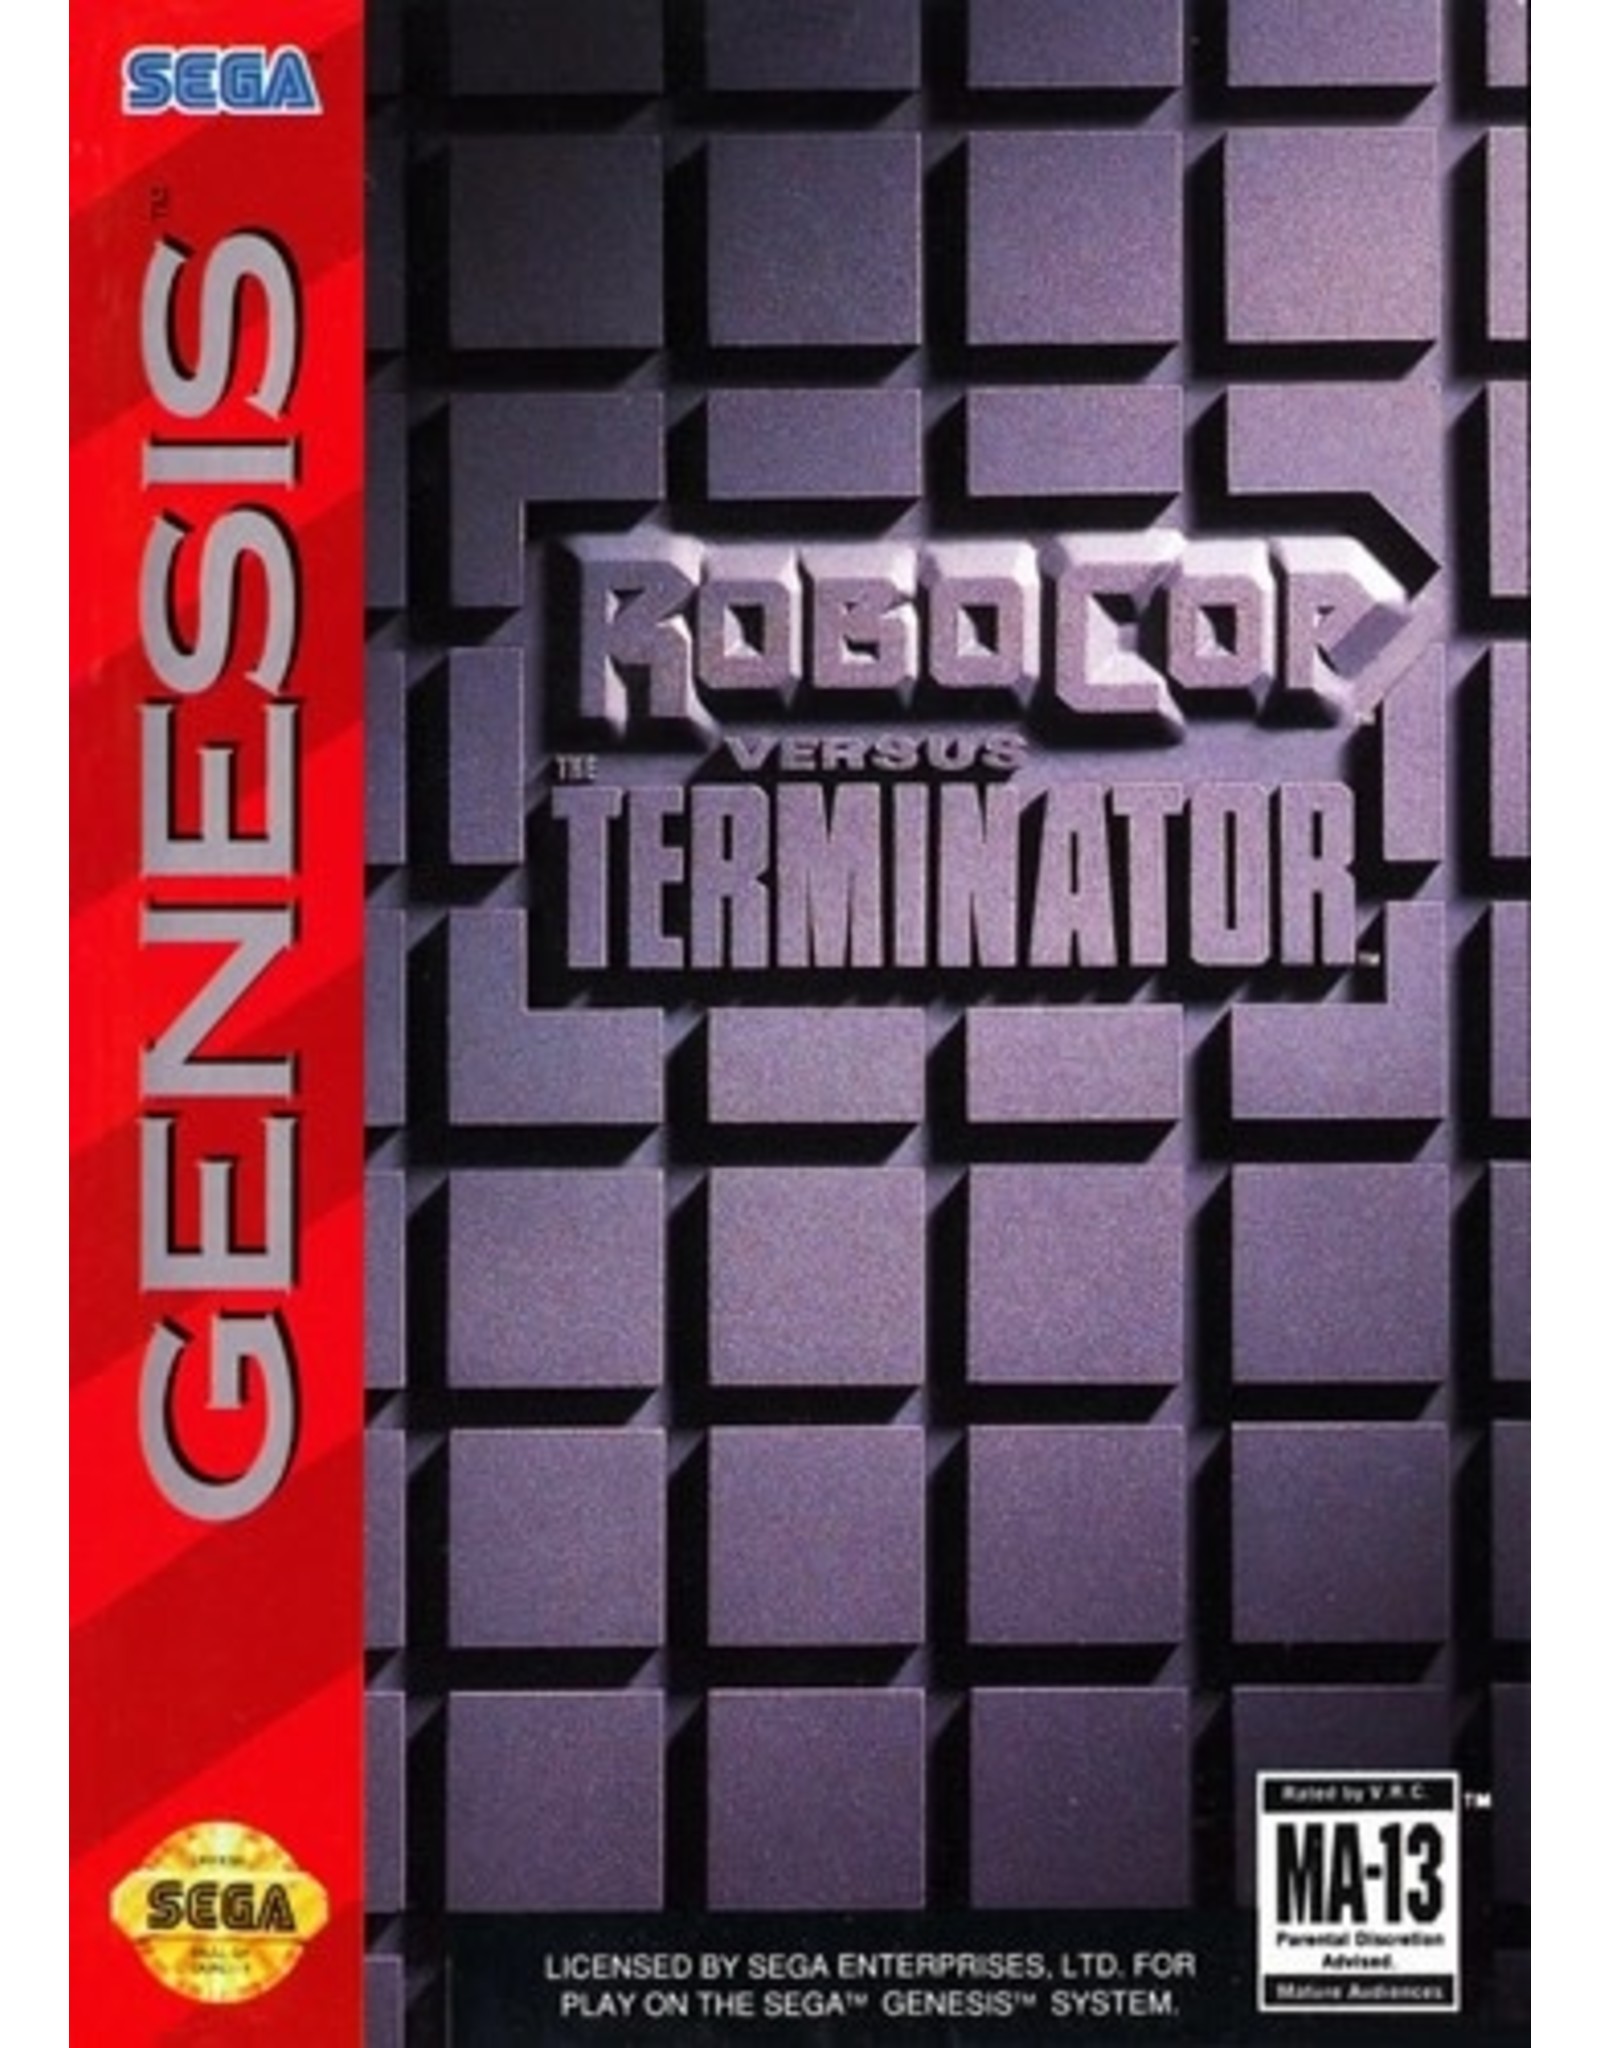 Sega Genesis Robocop vs The Terminator (Boxed, No Manual, Damaged Label)